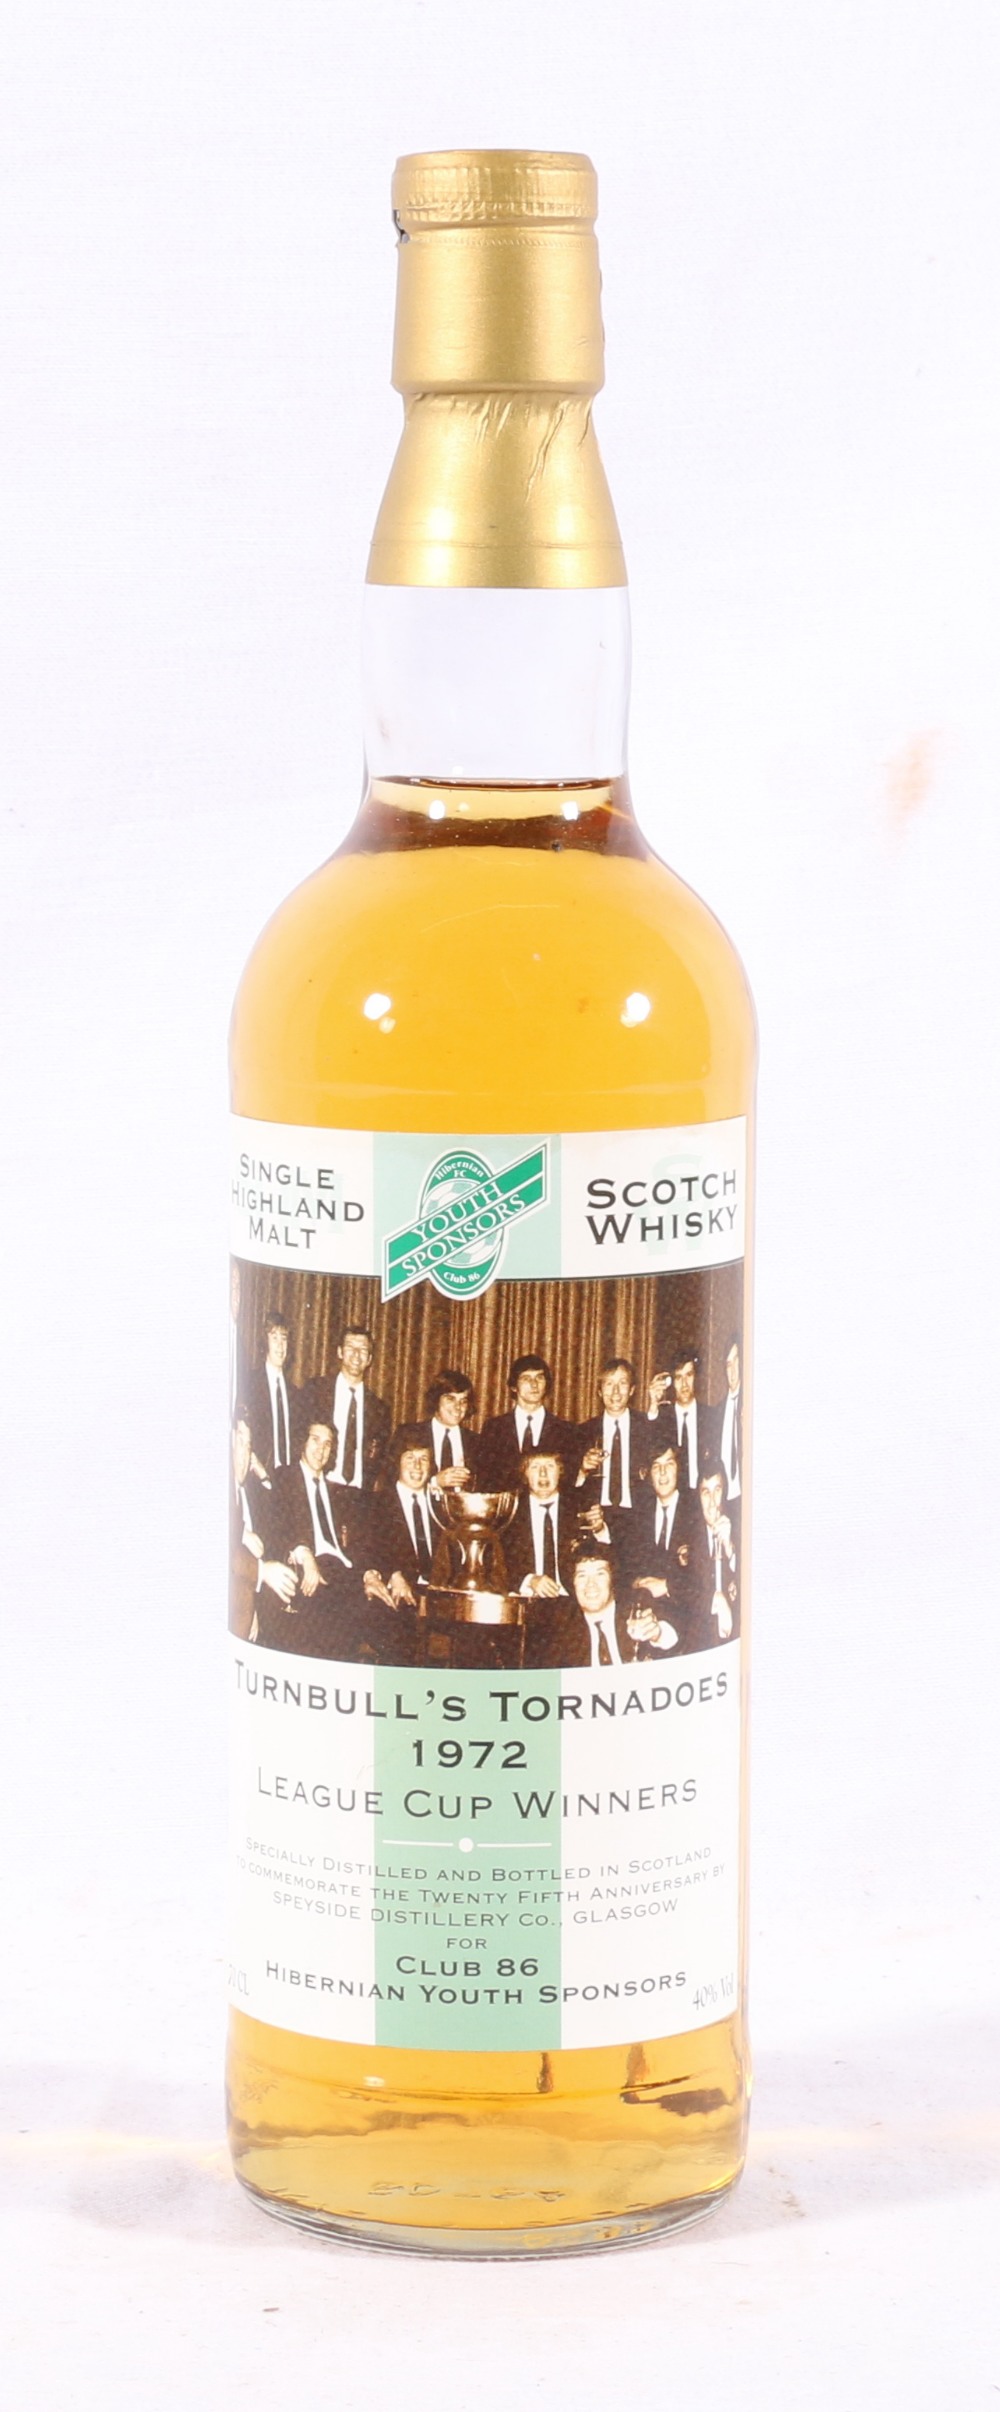 TURNBULLS TORNADOES 1972 league cup winners commemorative Highland single malt Scotch whisky